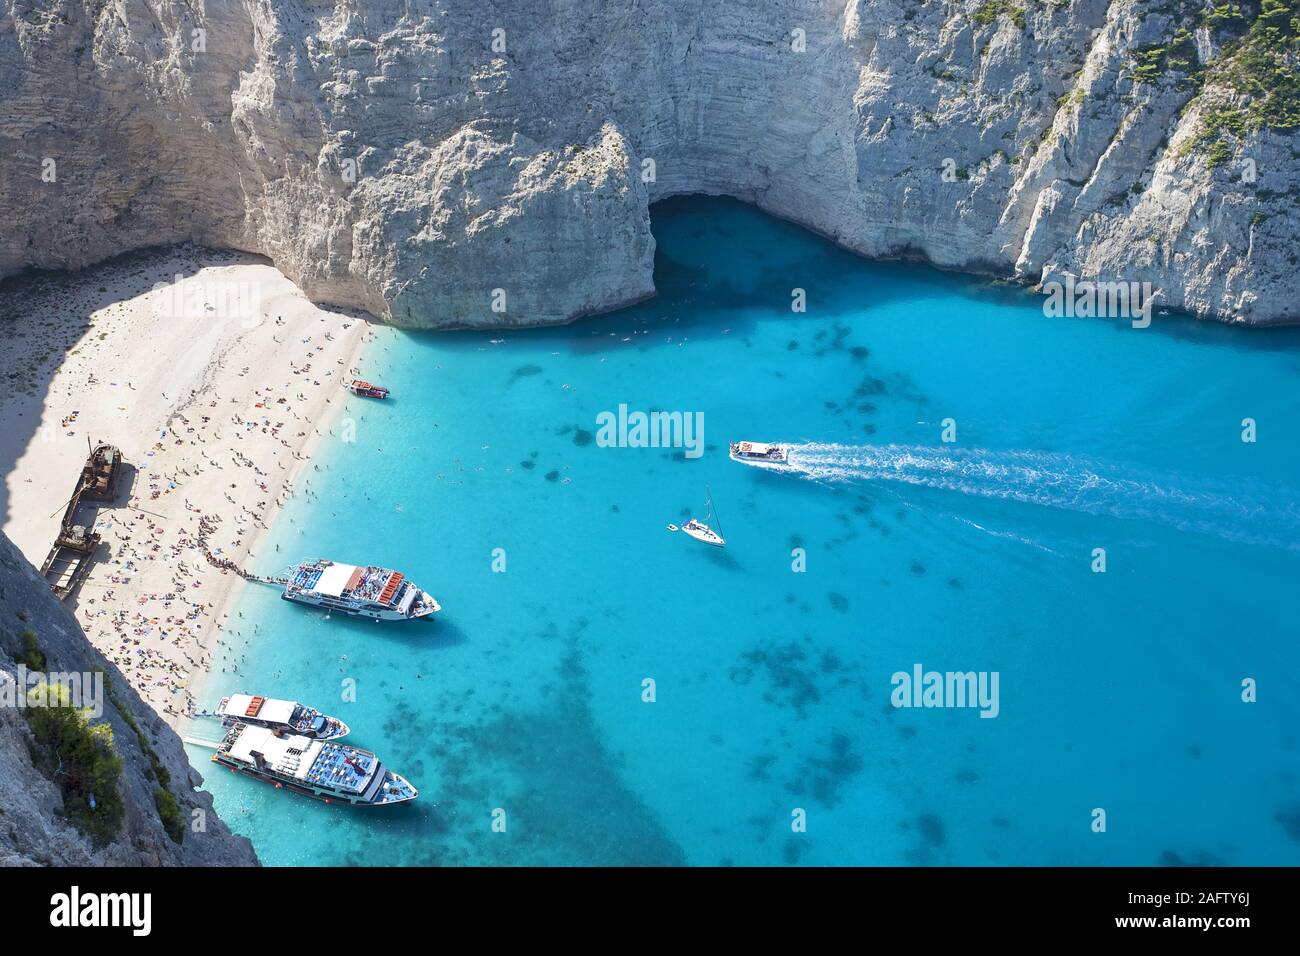 Shipwreck Bay, one of the most beautiful beaches in Greece, Zakynthos island, Greece Stock Photo